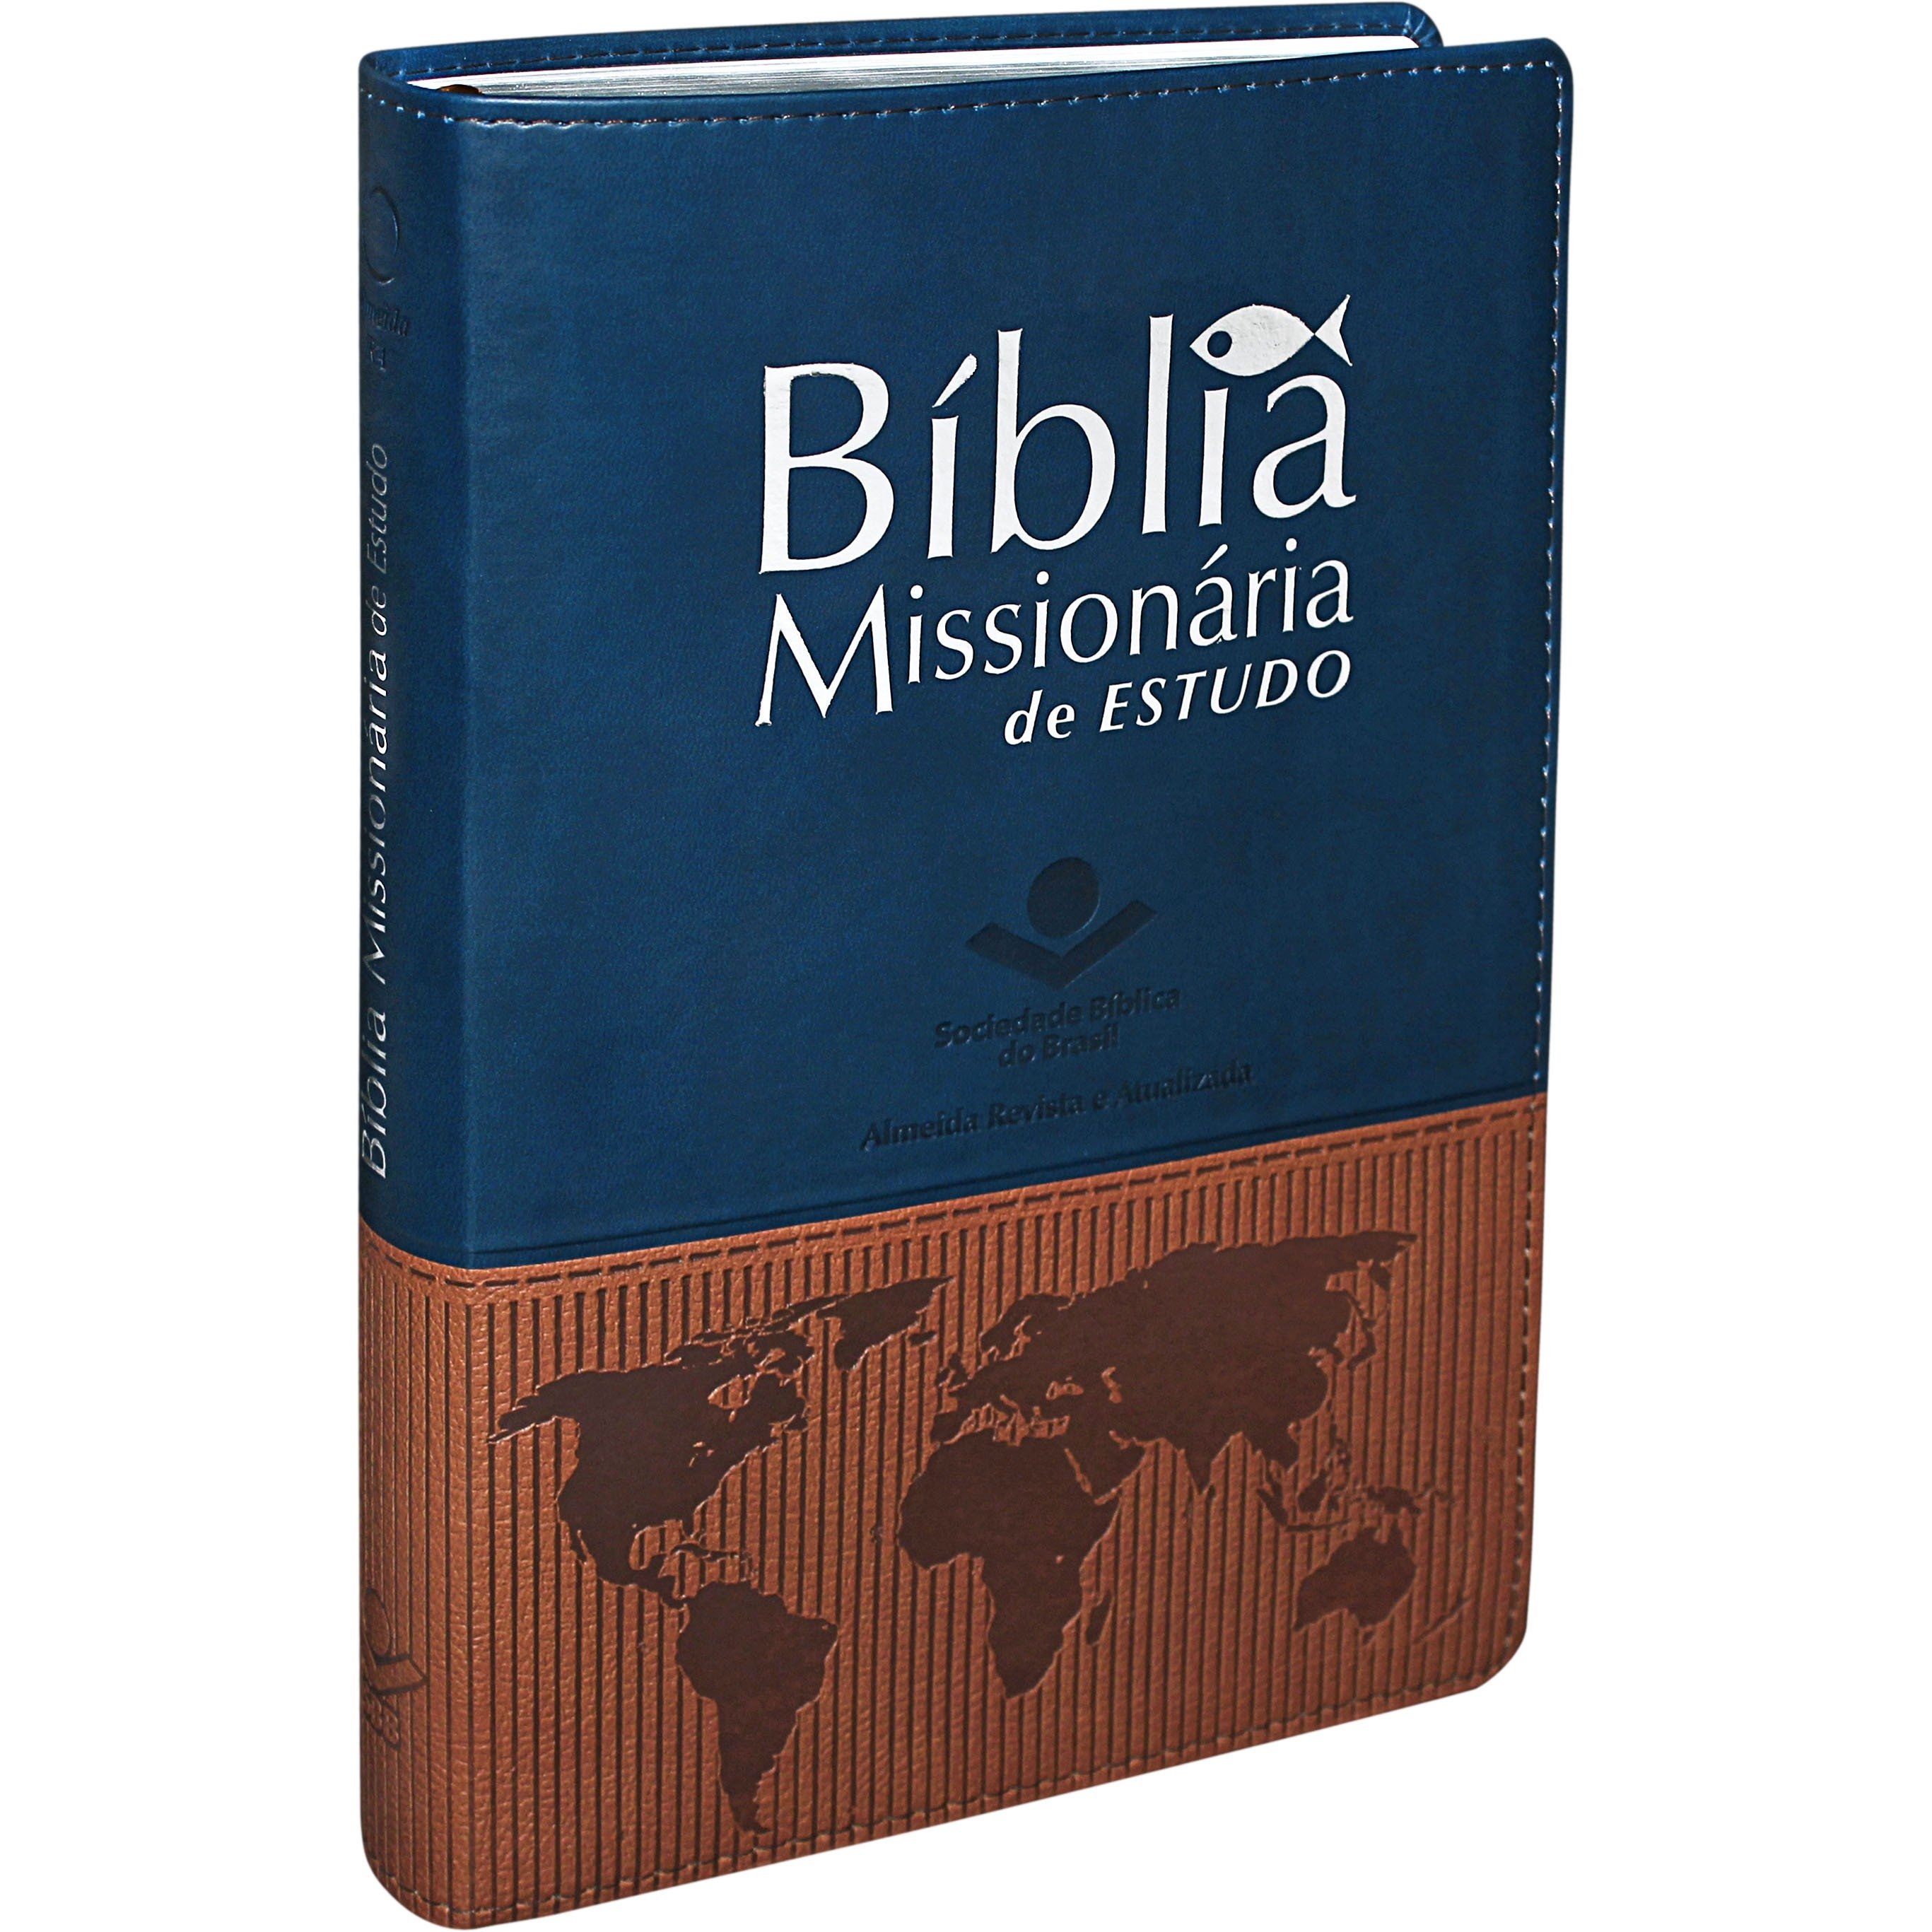 Bíblia Missionária _ SBB